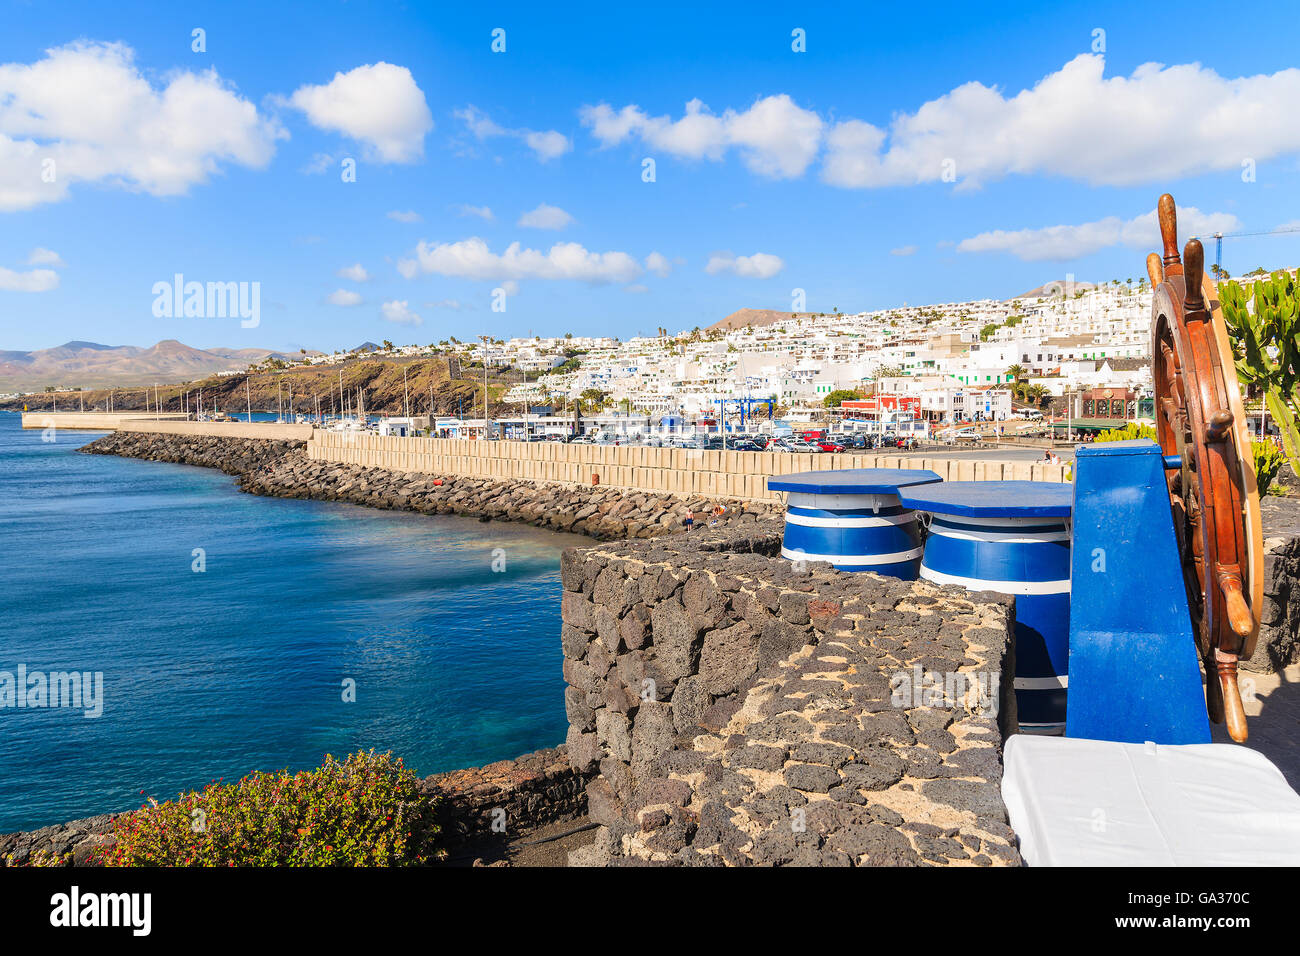 Wine barrels of local restaurant on coast of Lanzarote island in Puerto del Carmen town, Spain Stock Photo